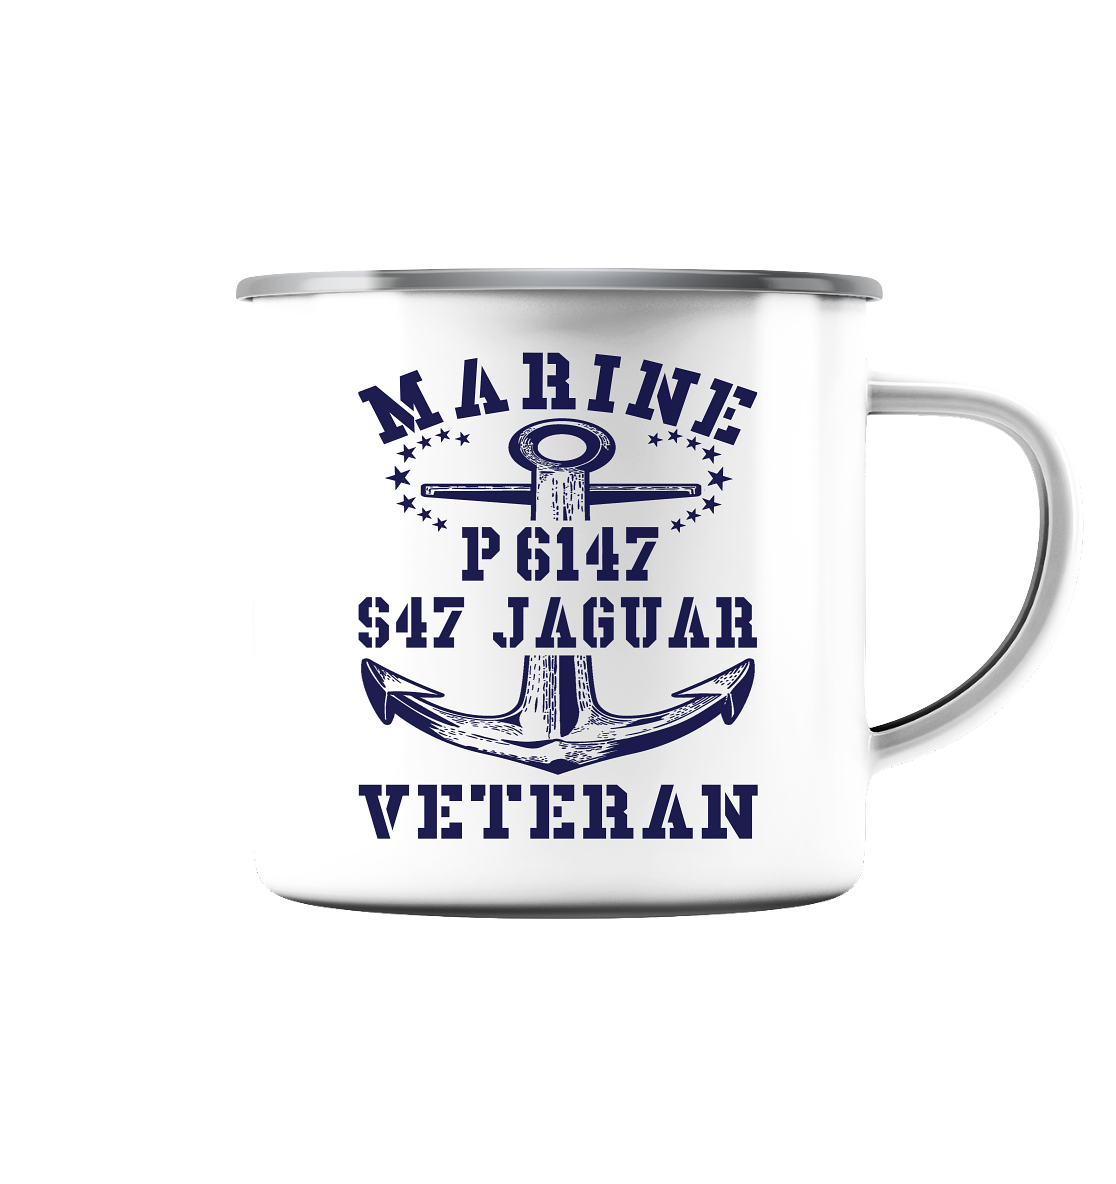 P6147 S47 JAGUAR Marine Veteran - Emaille Tasse (Silber)